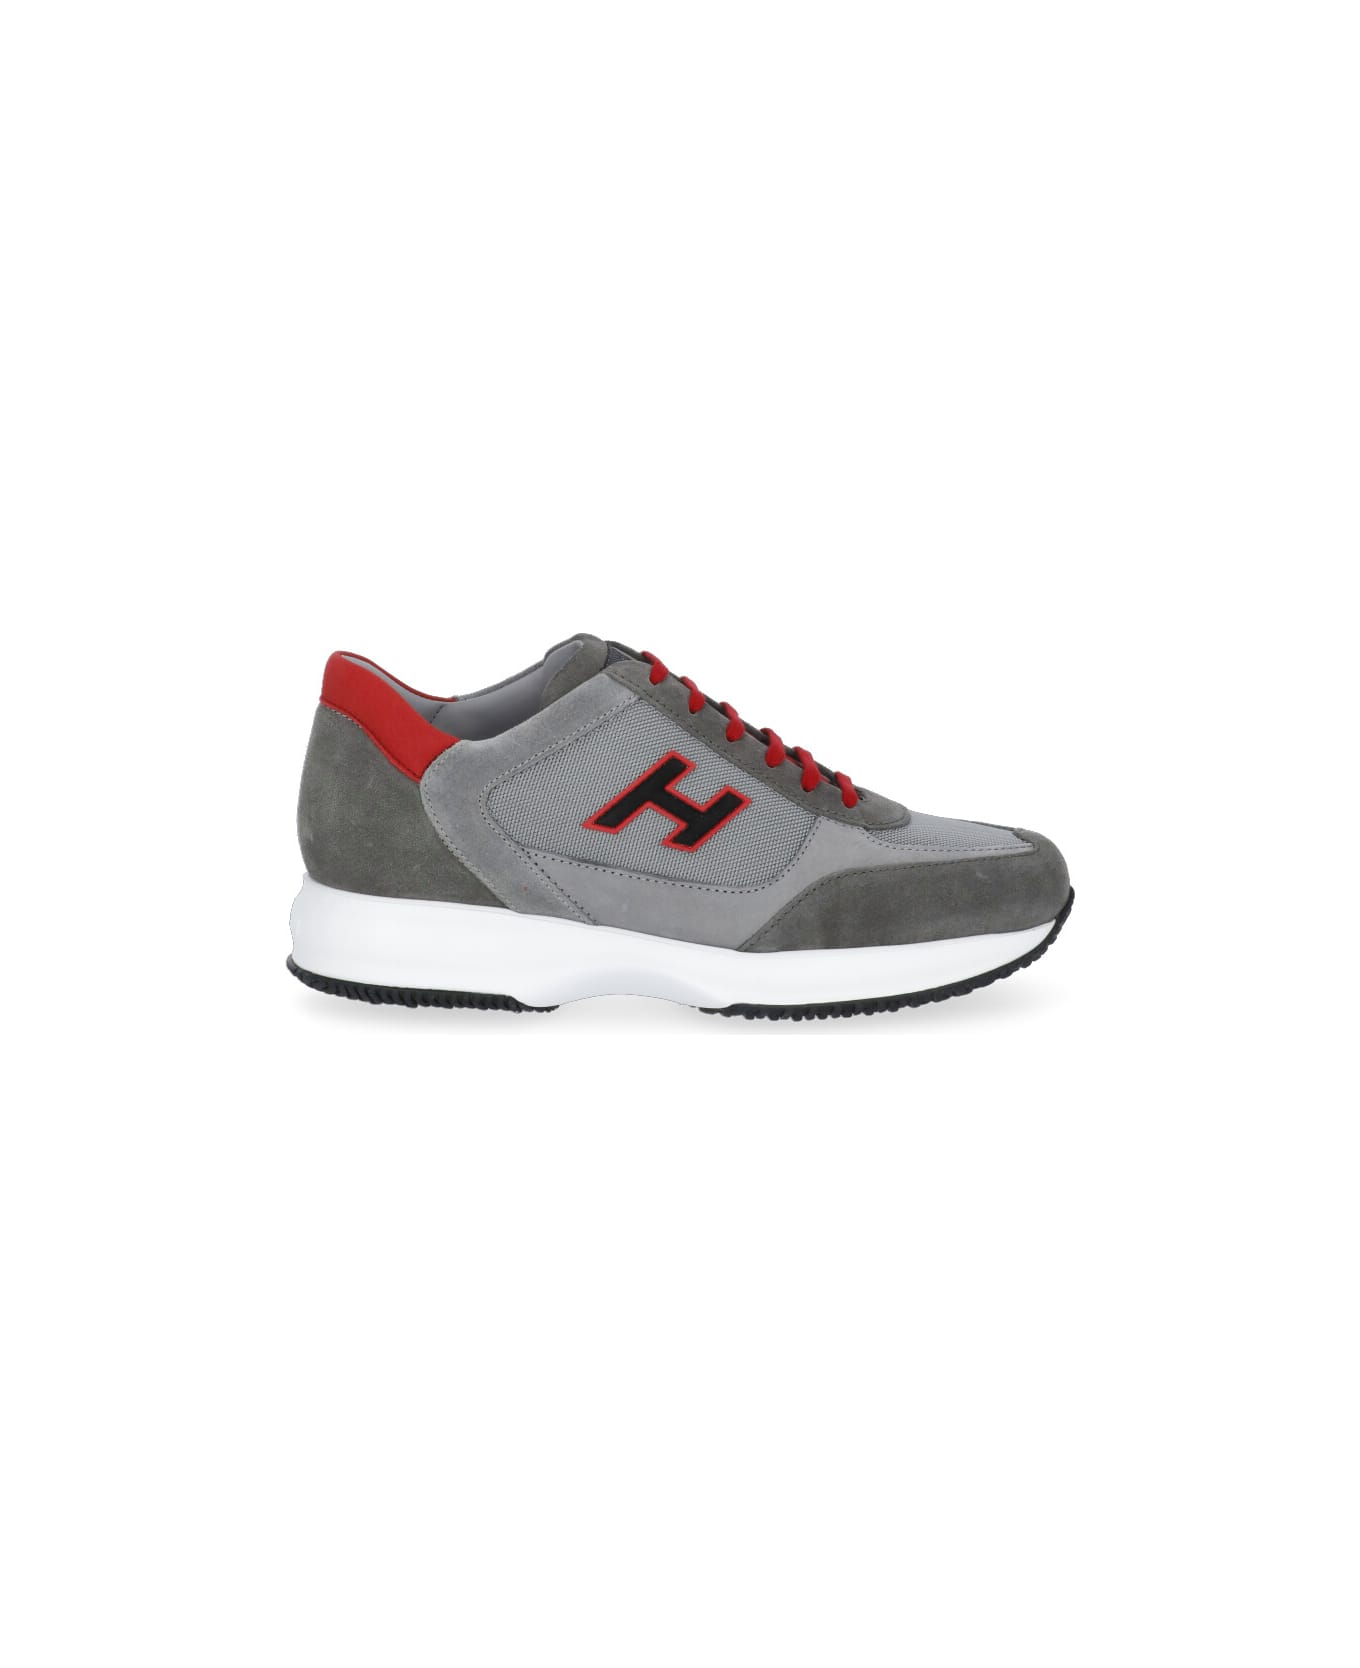 Hogan "interactive" Sneakers - Grey